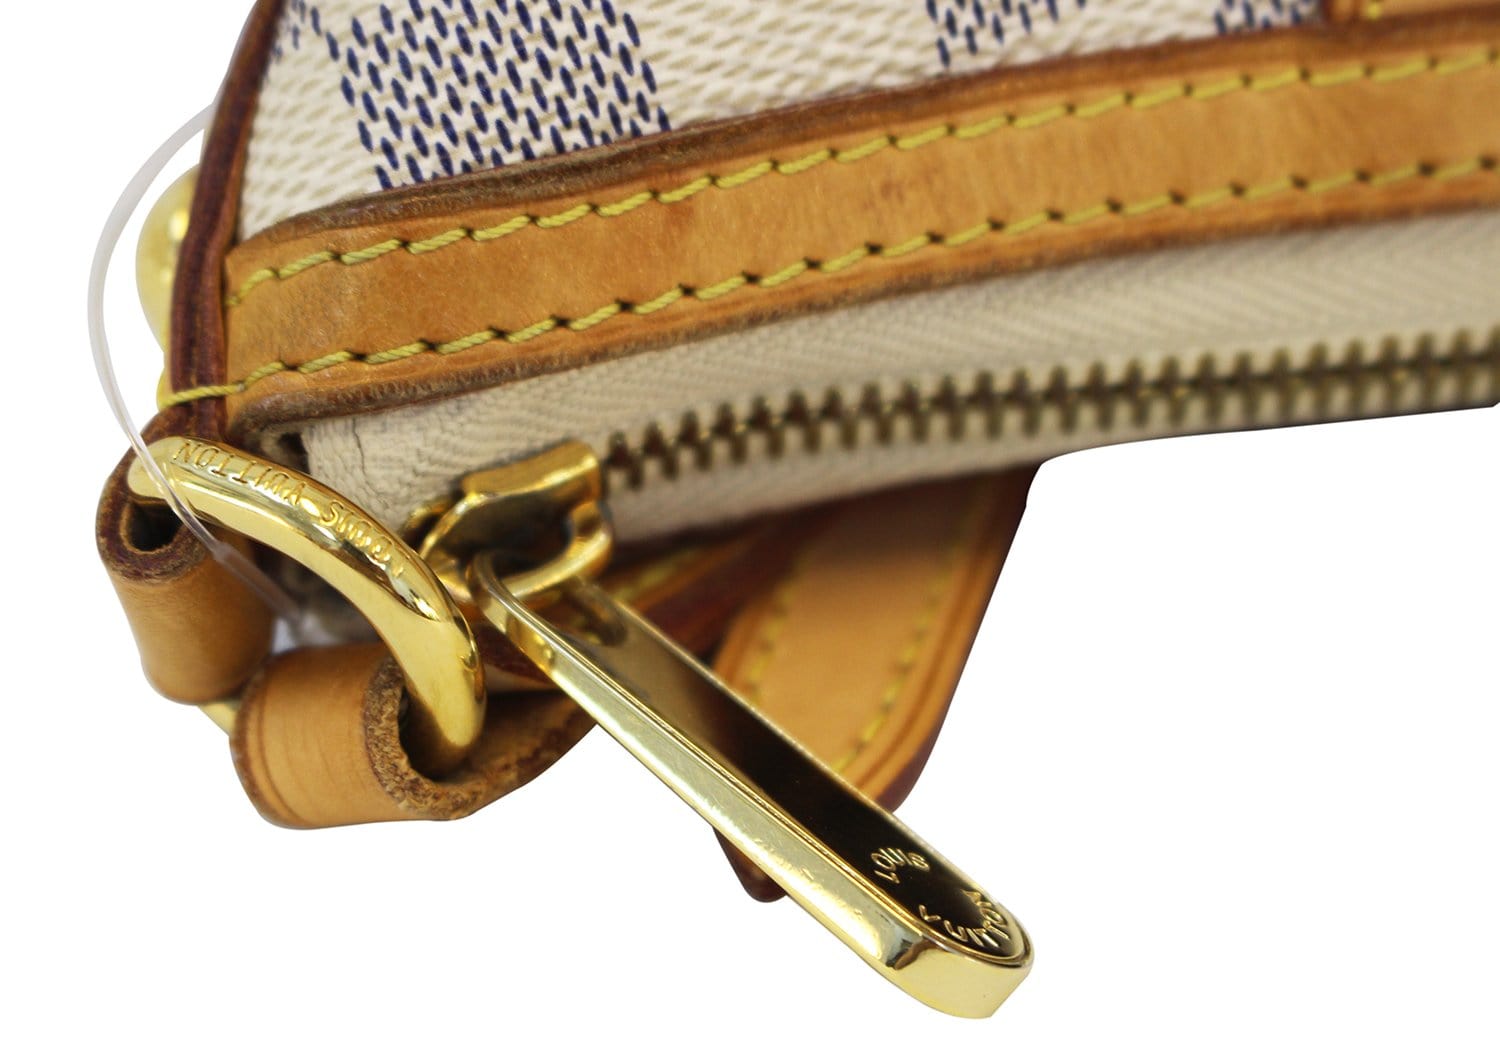 LOUIS VUITTON Damier Azur Siracusa PM Shoulder Handbag - 20% Off